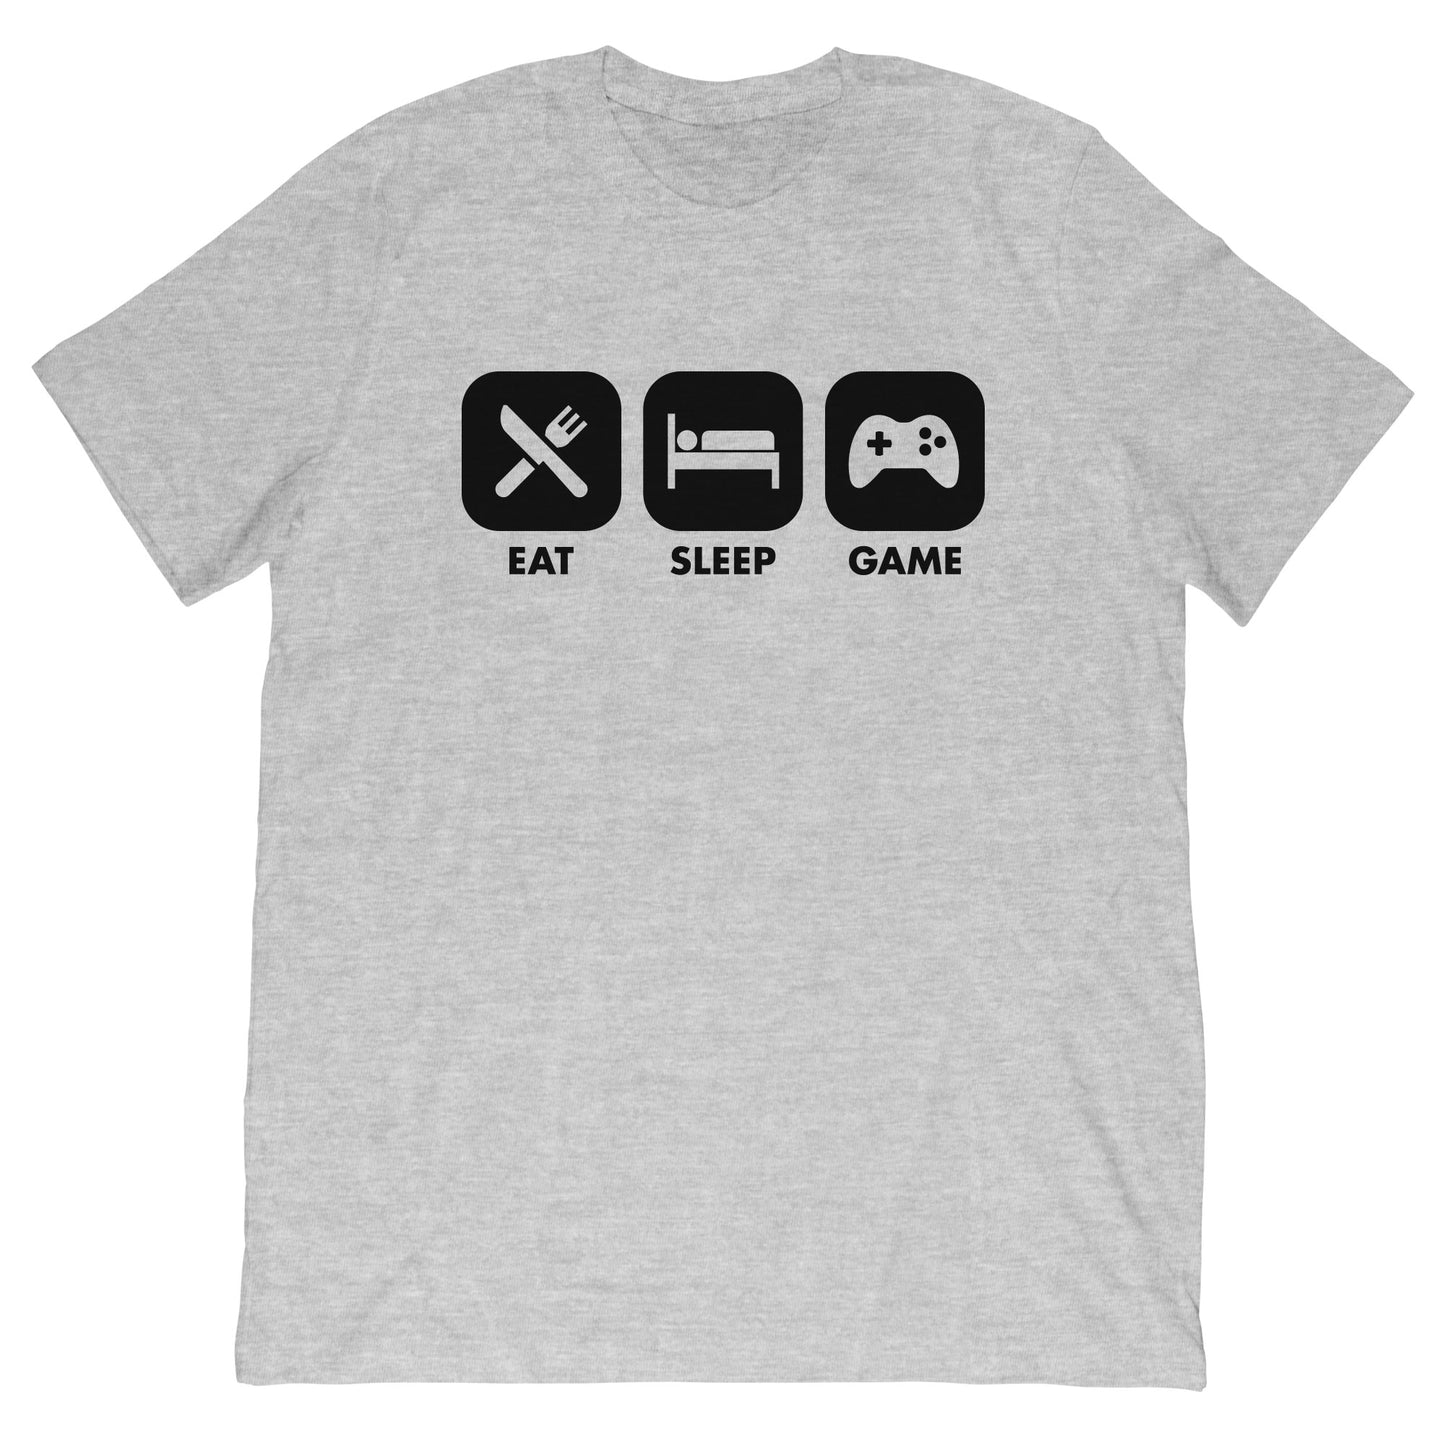 Eat, Sleep, Game T-Shirt